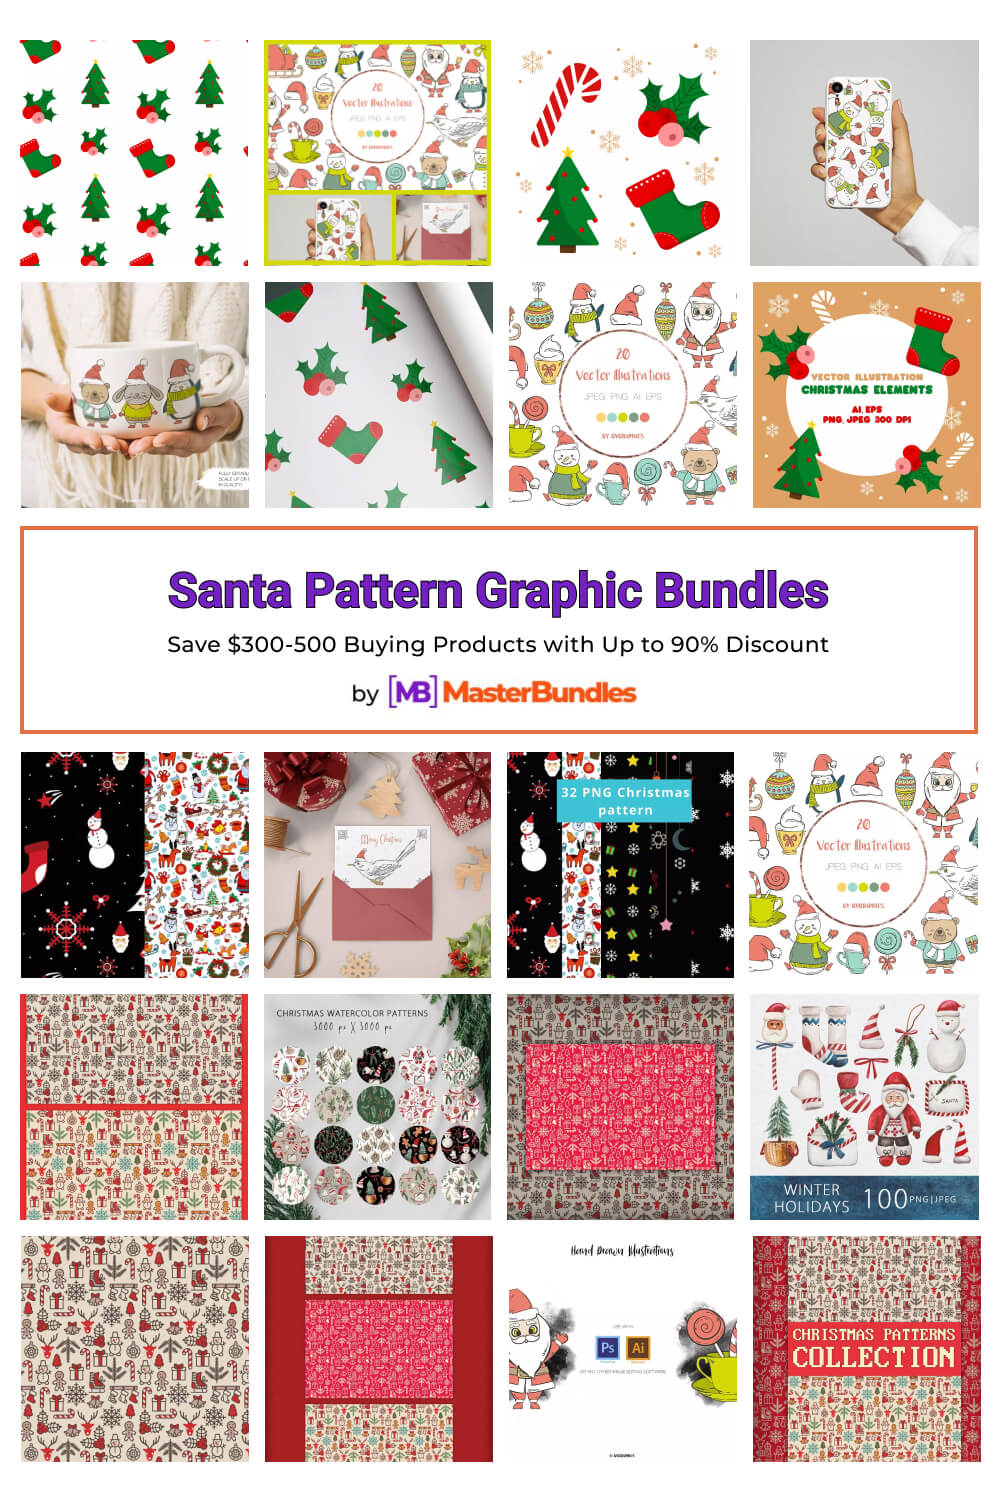 santa pattern graphic bundles pinterest image.